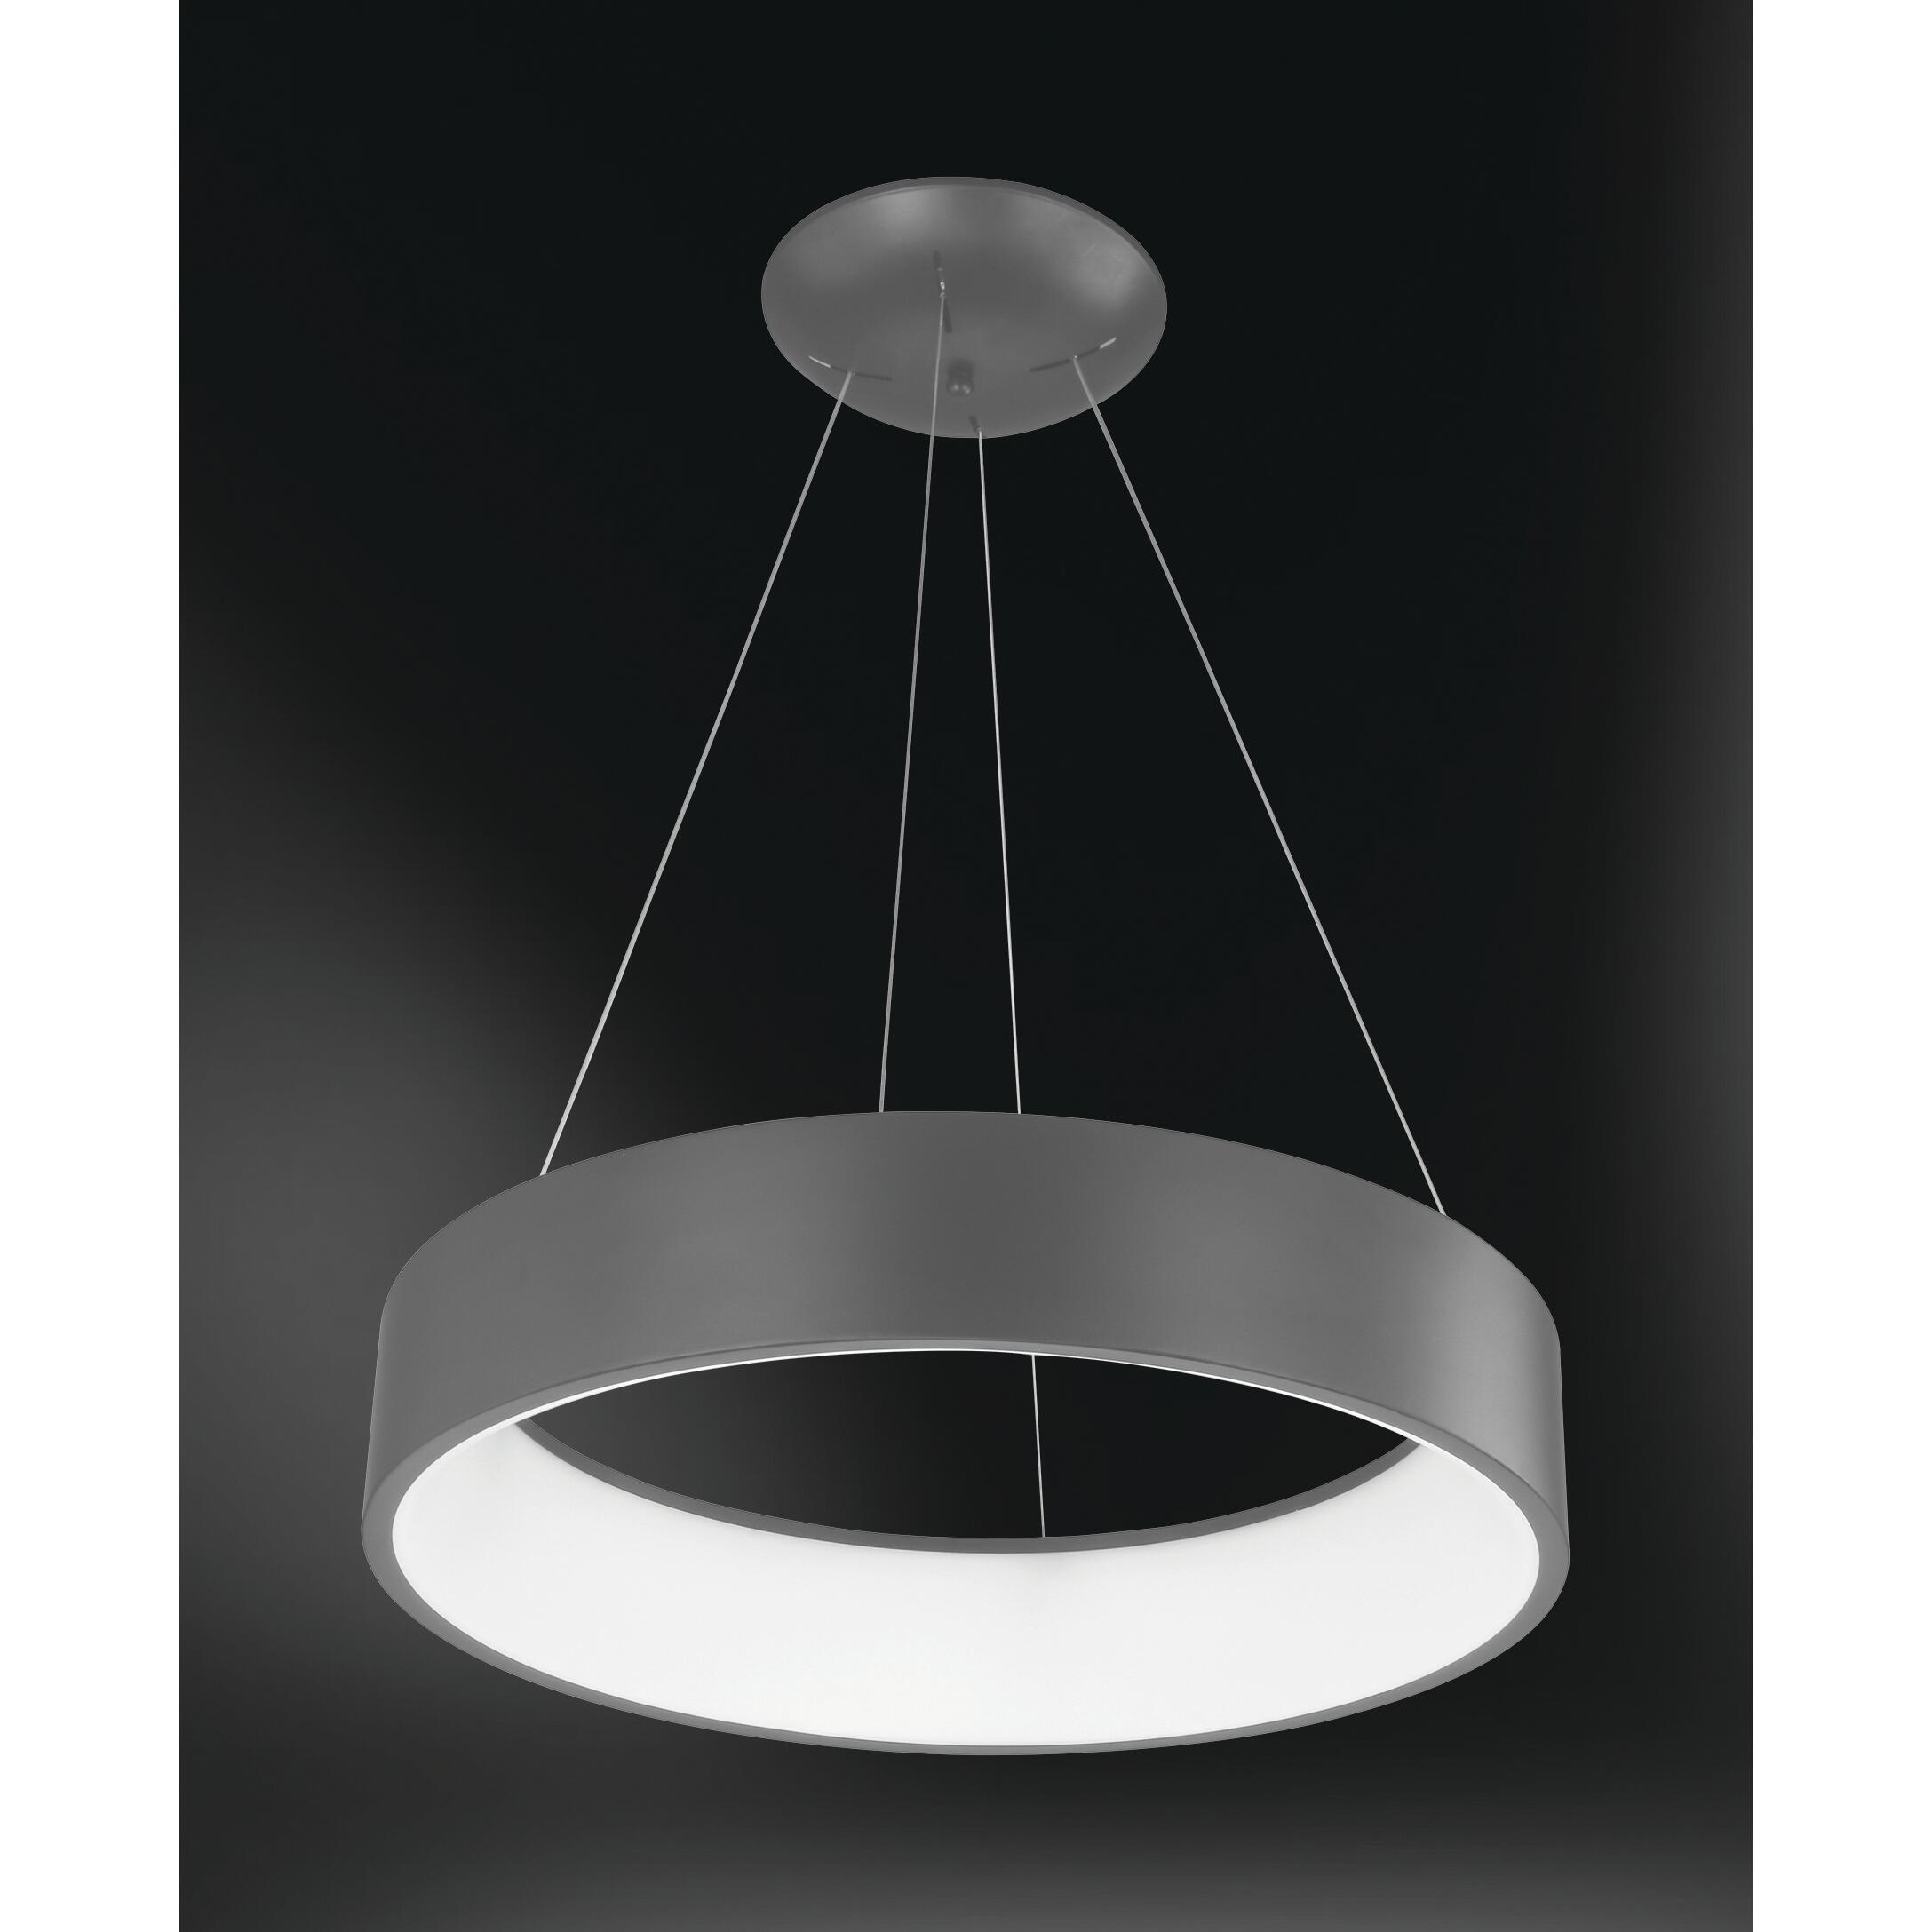 Lampadario Design Pure grigio, in metallo, D. 45 cm, WOFI - 4